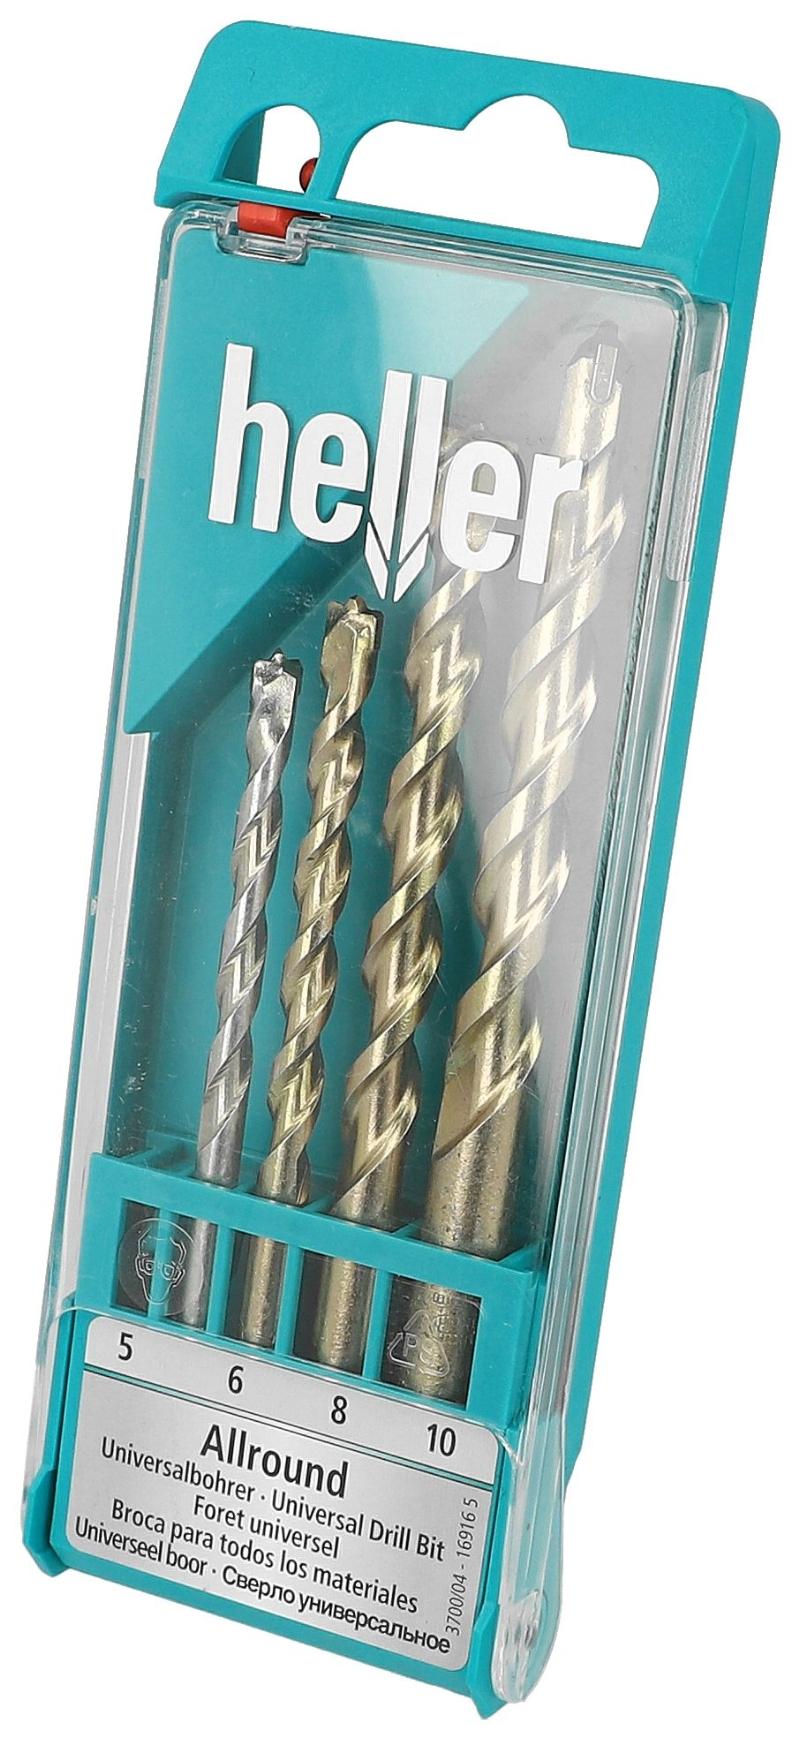 Heller Unibor Akku-Set 5,6,8,10 mm